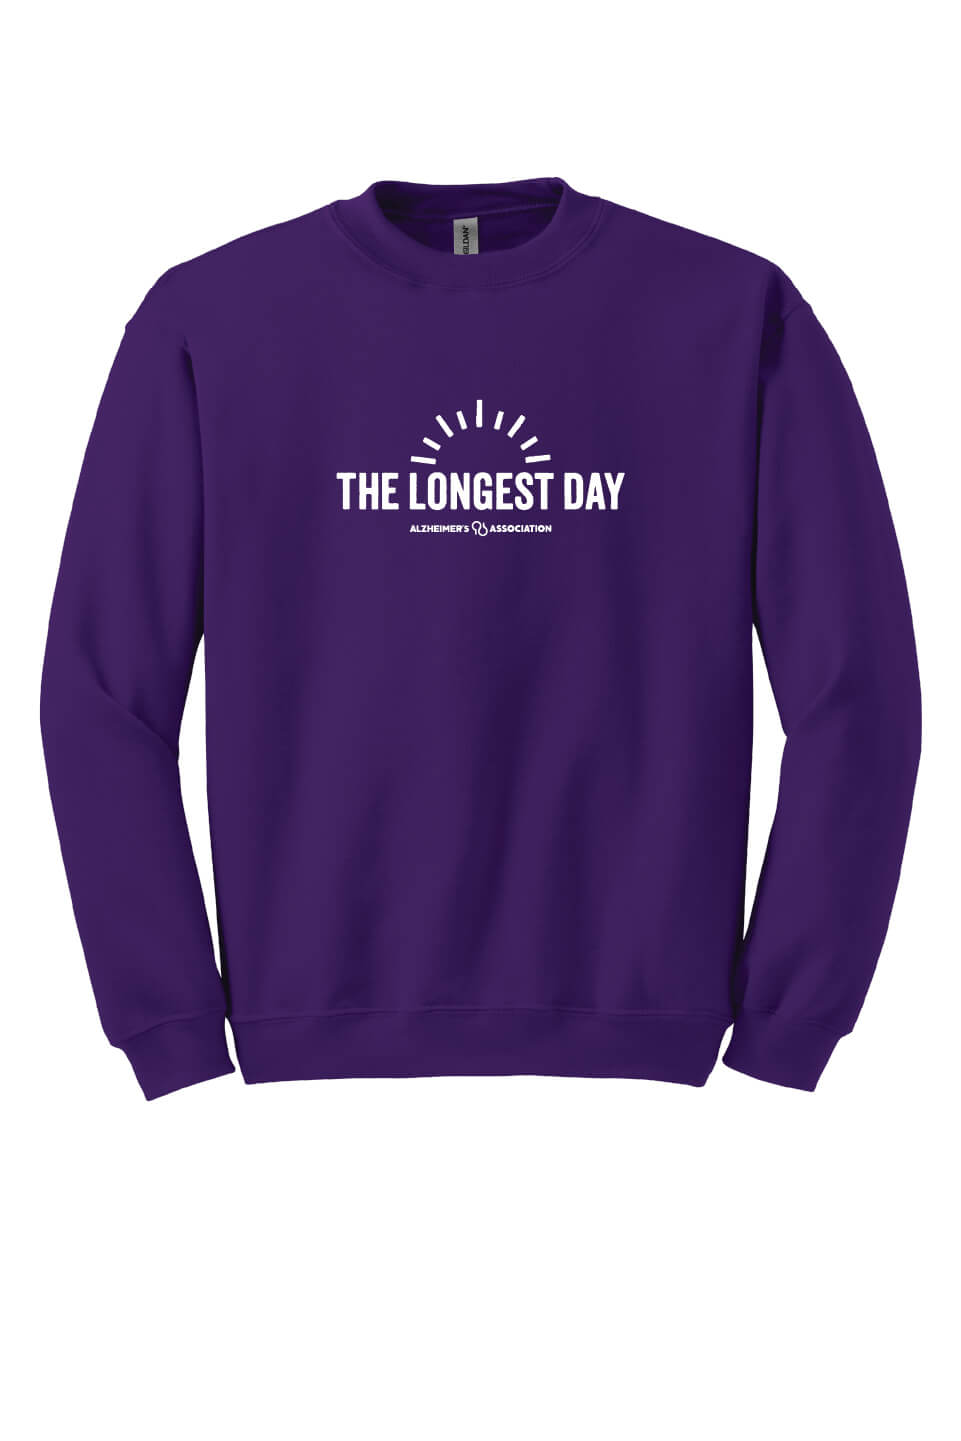 The Longest Day Crewneck Sweatshirt horizontal purple